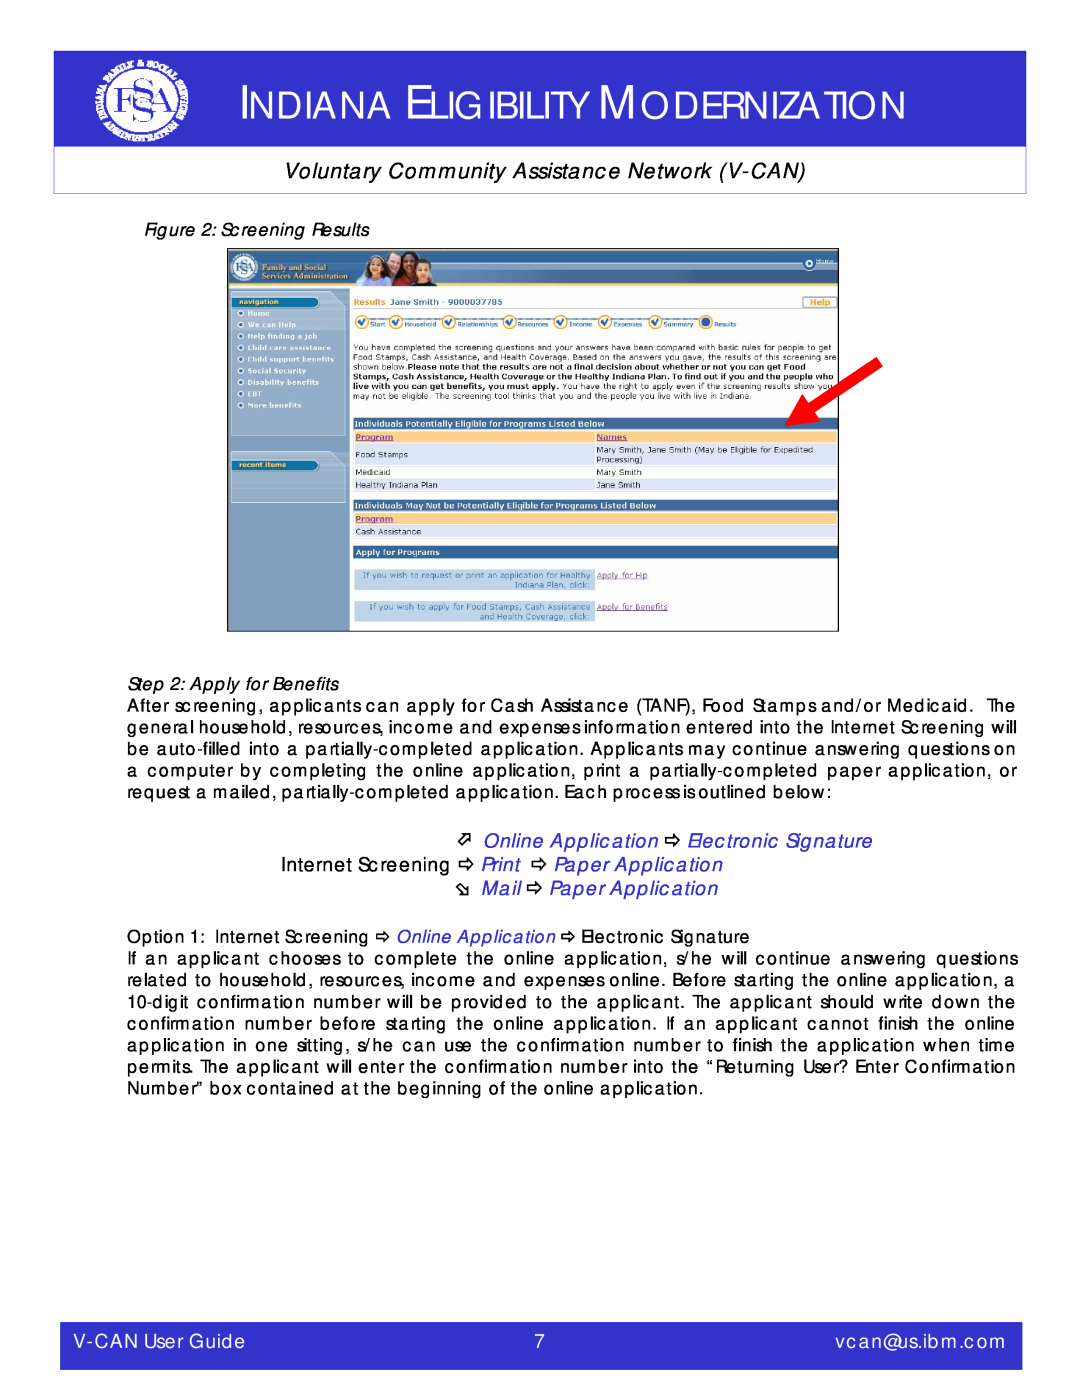 IBM manual Ü Online Application Ö Electronic Signature, Internet Screening Ö Print Ö Paper Application, V-CAN User Guide 